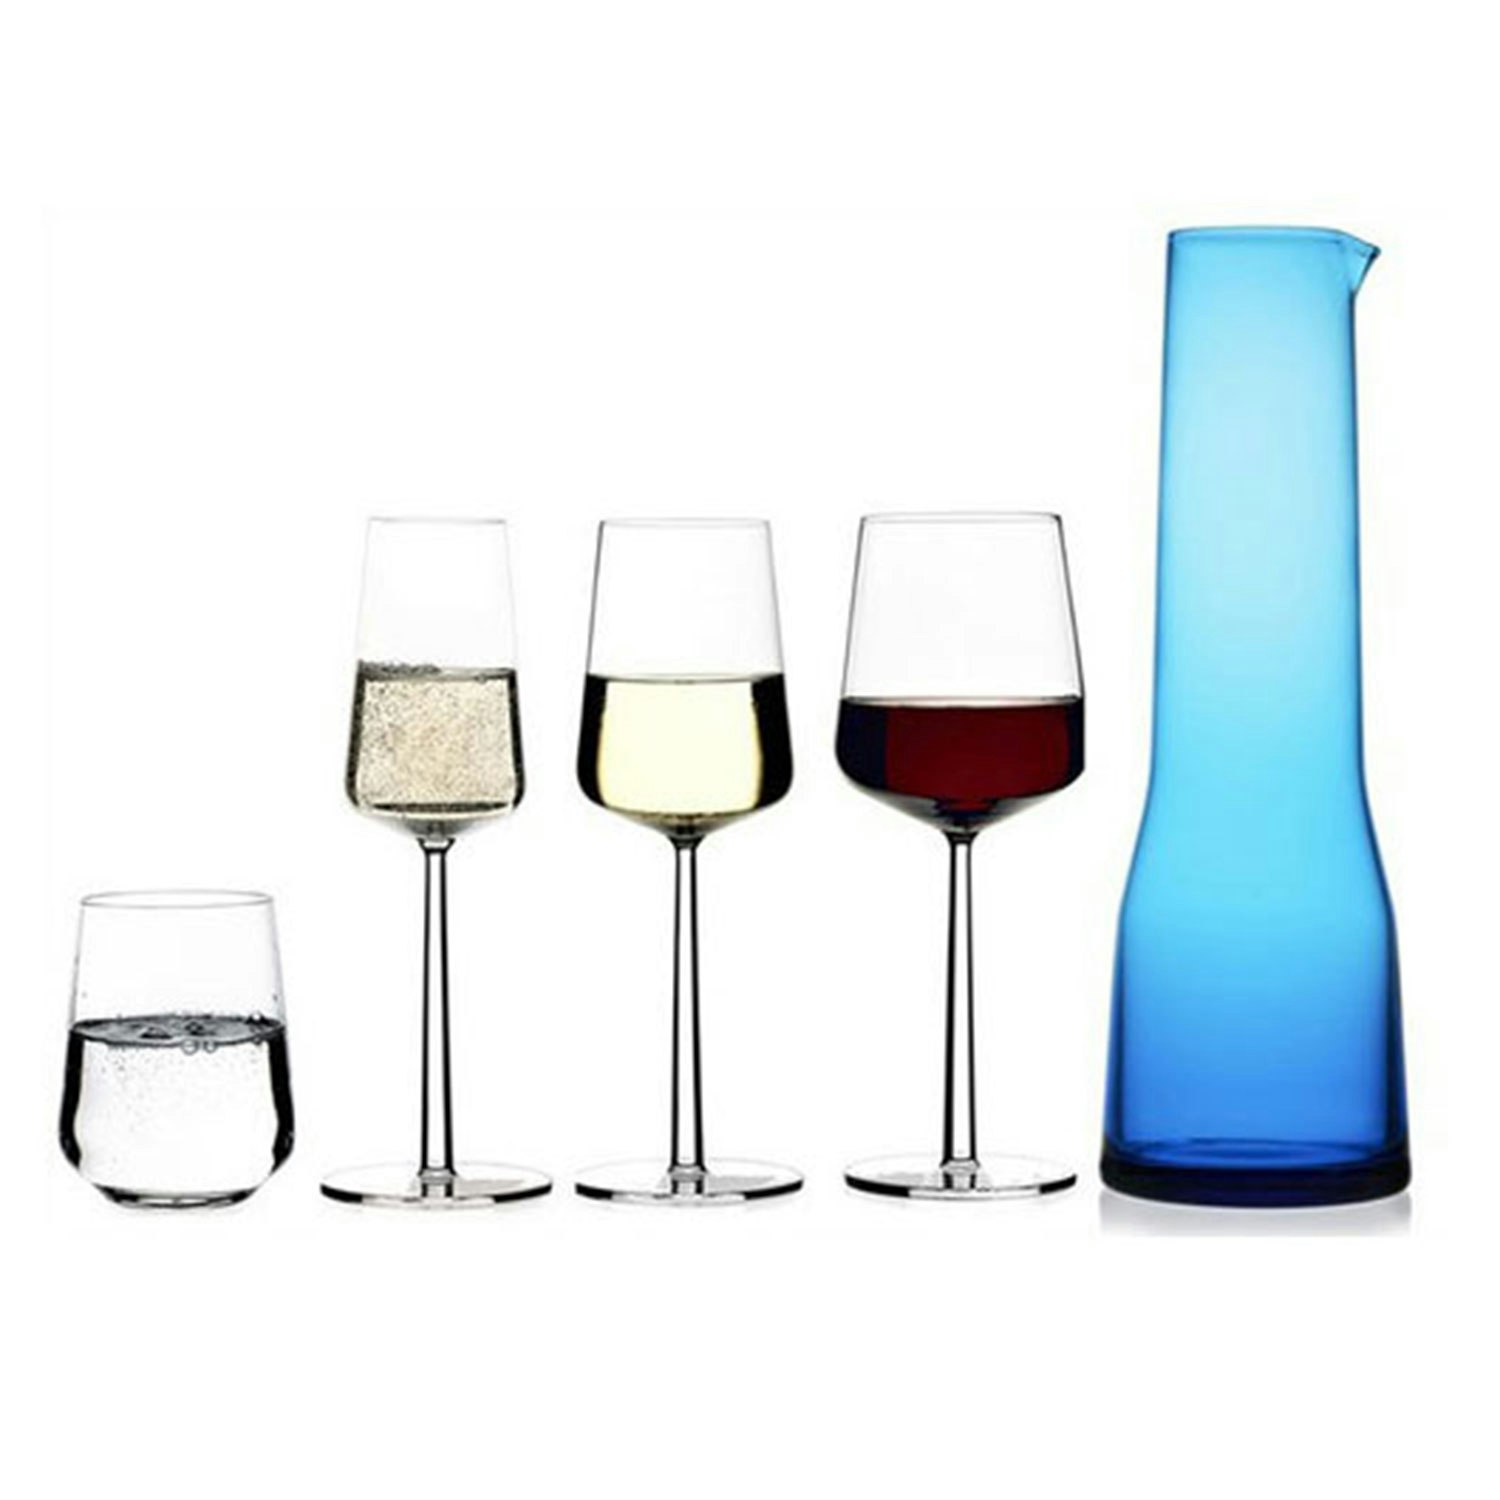 https://royaldesign.com/image/2/iittala-essence-water-glass-35-cl-set-of-4-clear-3